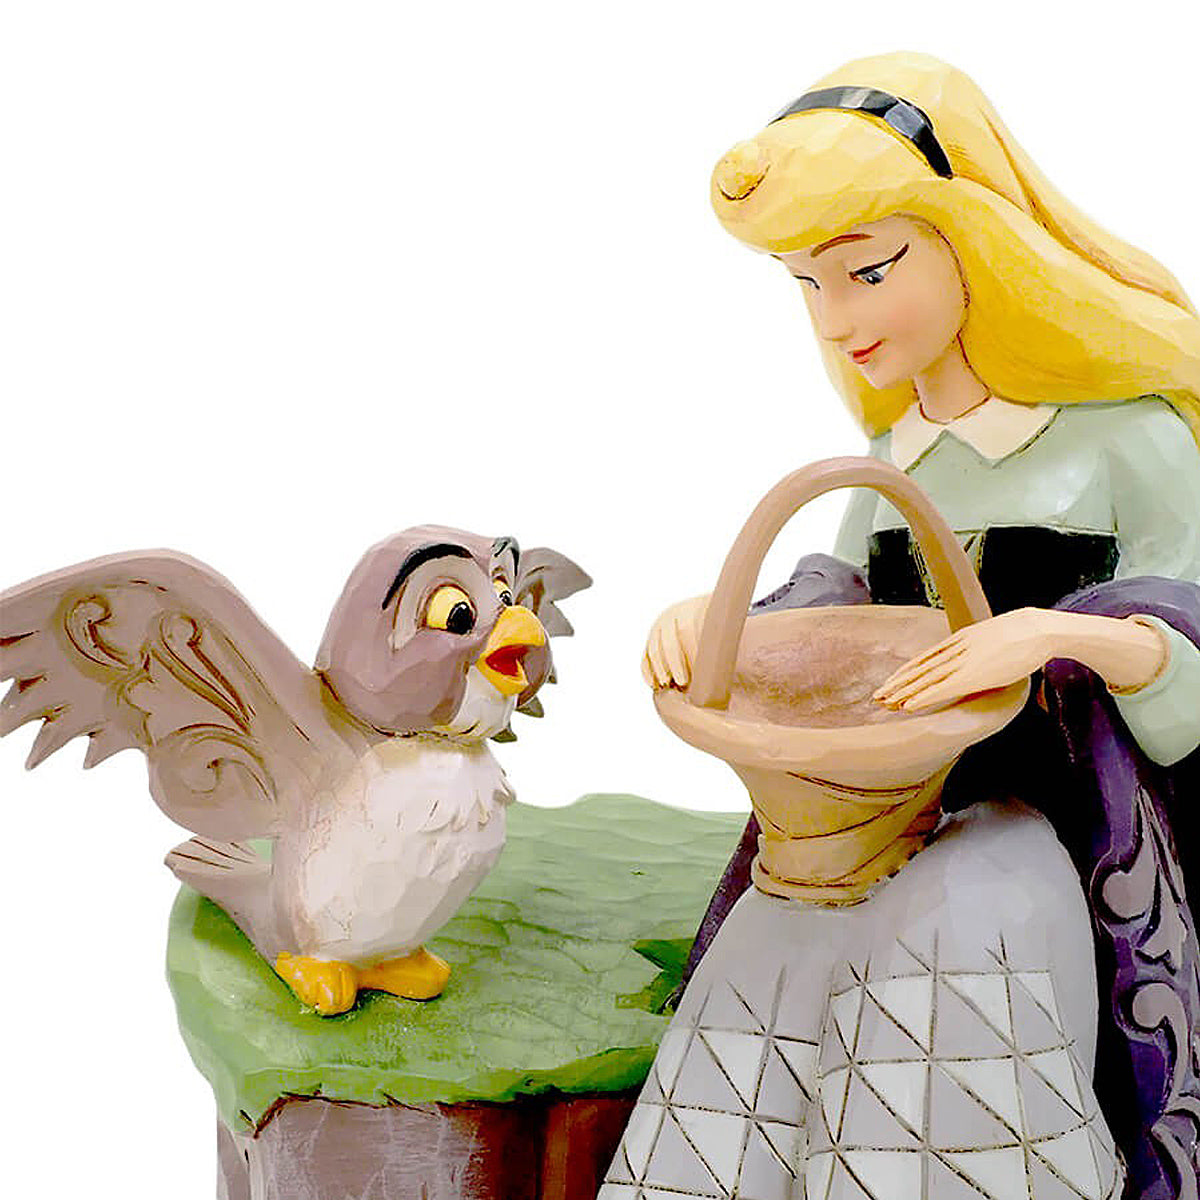 Disney Traditions Sleeping Beauty 60th Anniversary Figurine by Jim